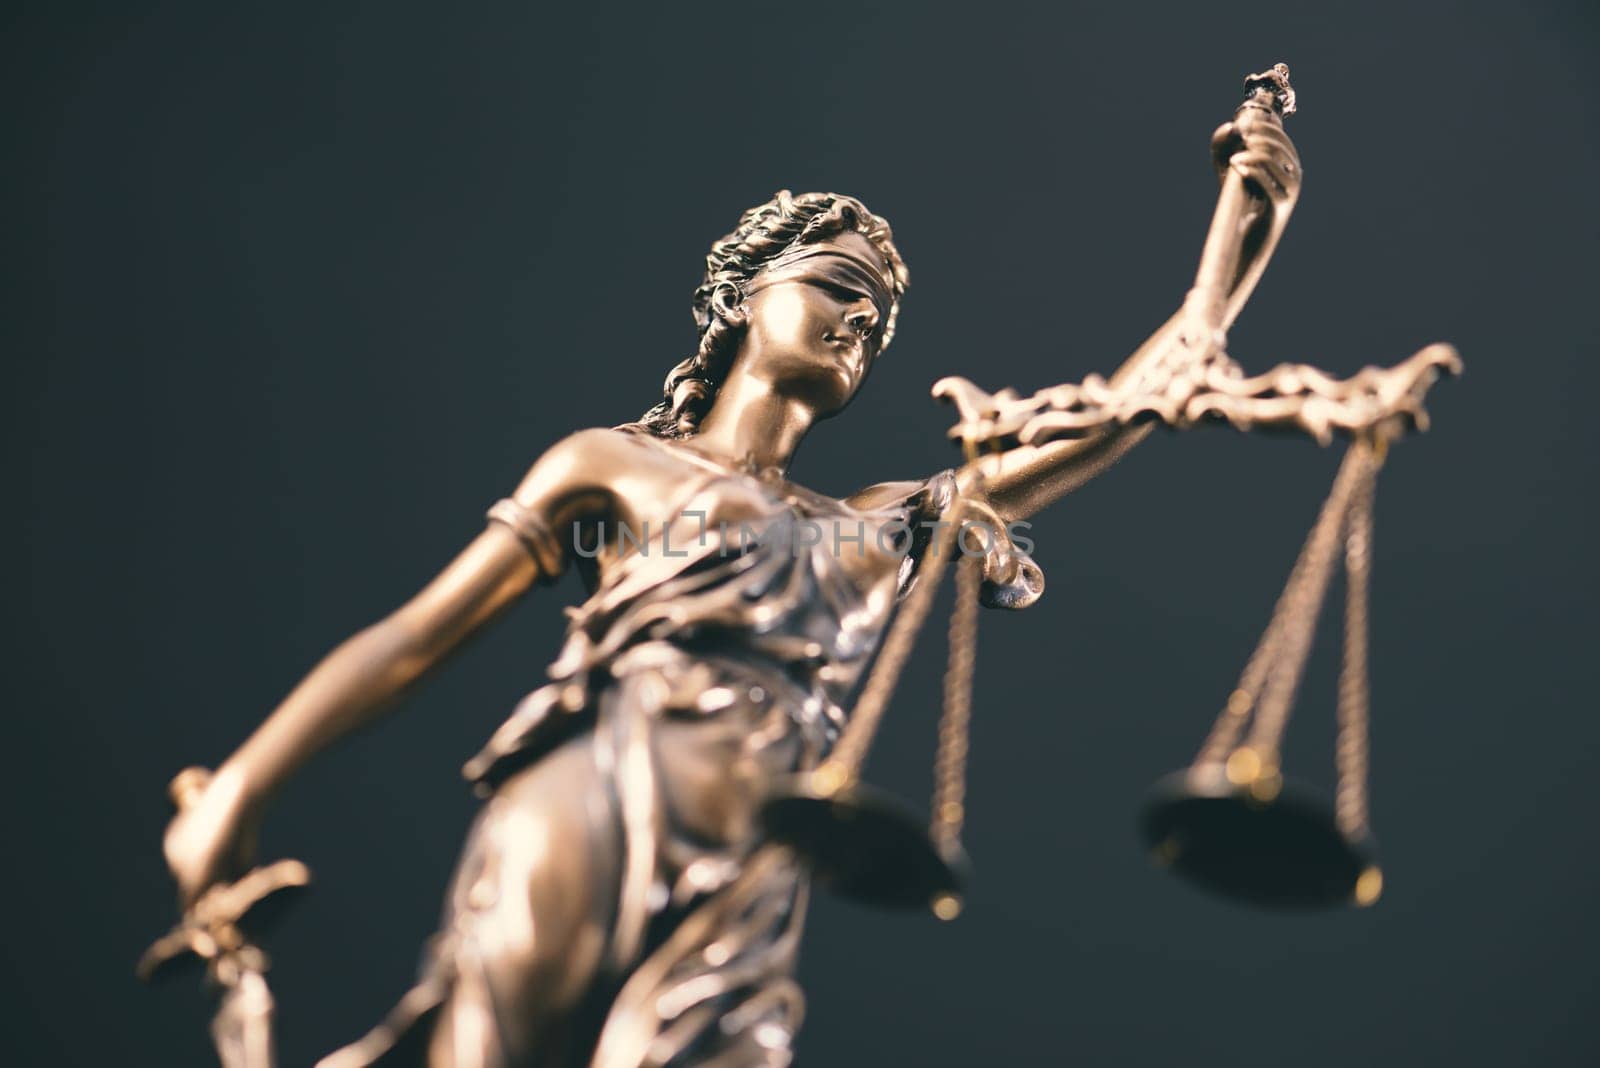 Law, legal, judge concept. Lady justice composition